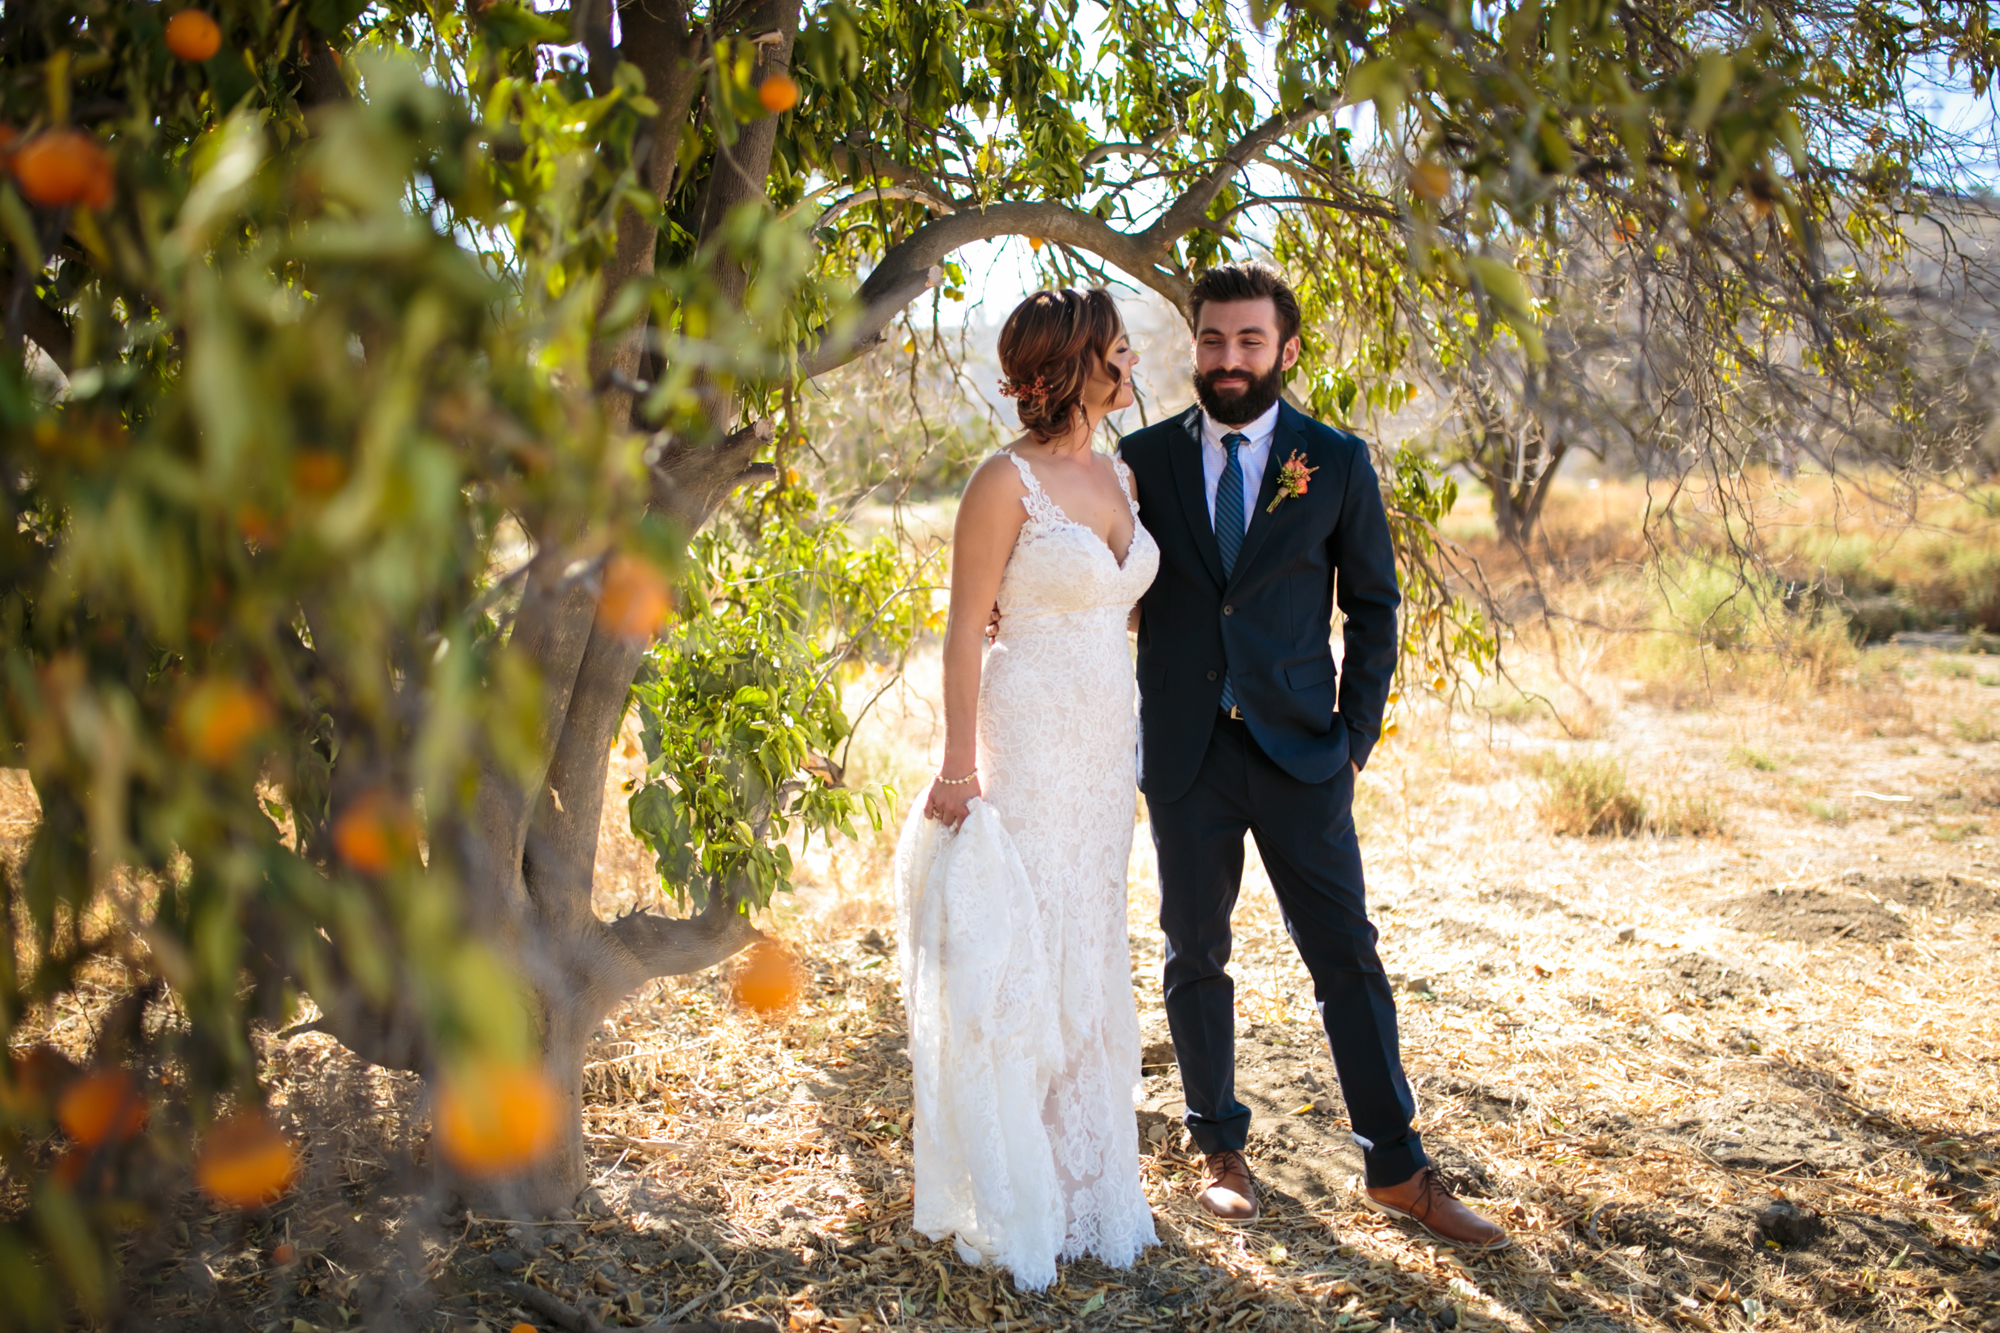 Couple stands under an orange tree.